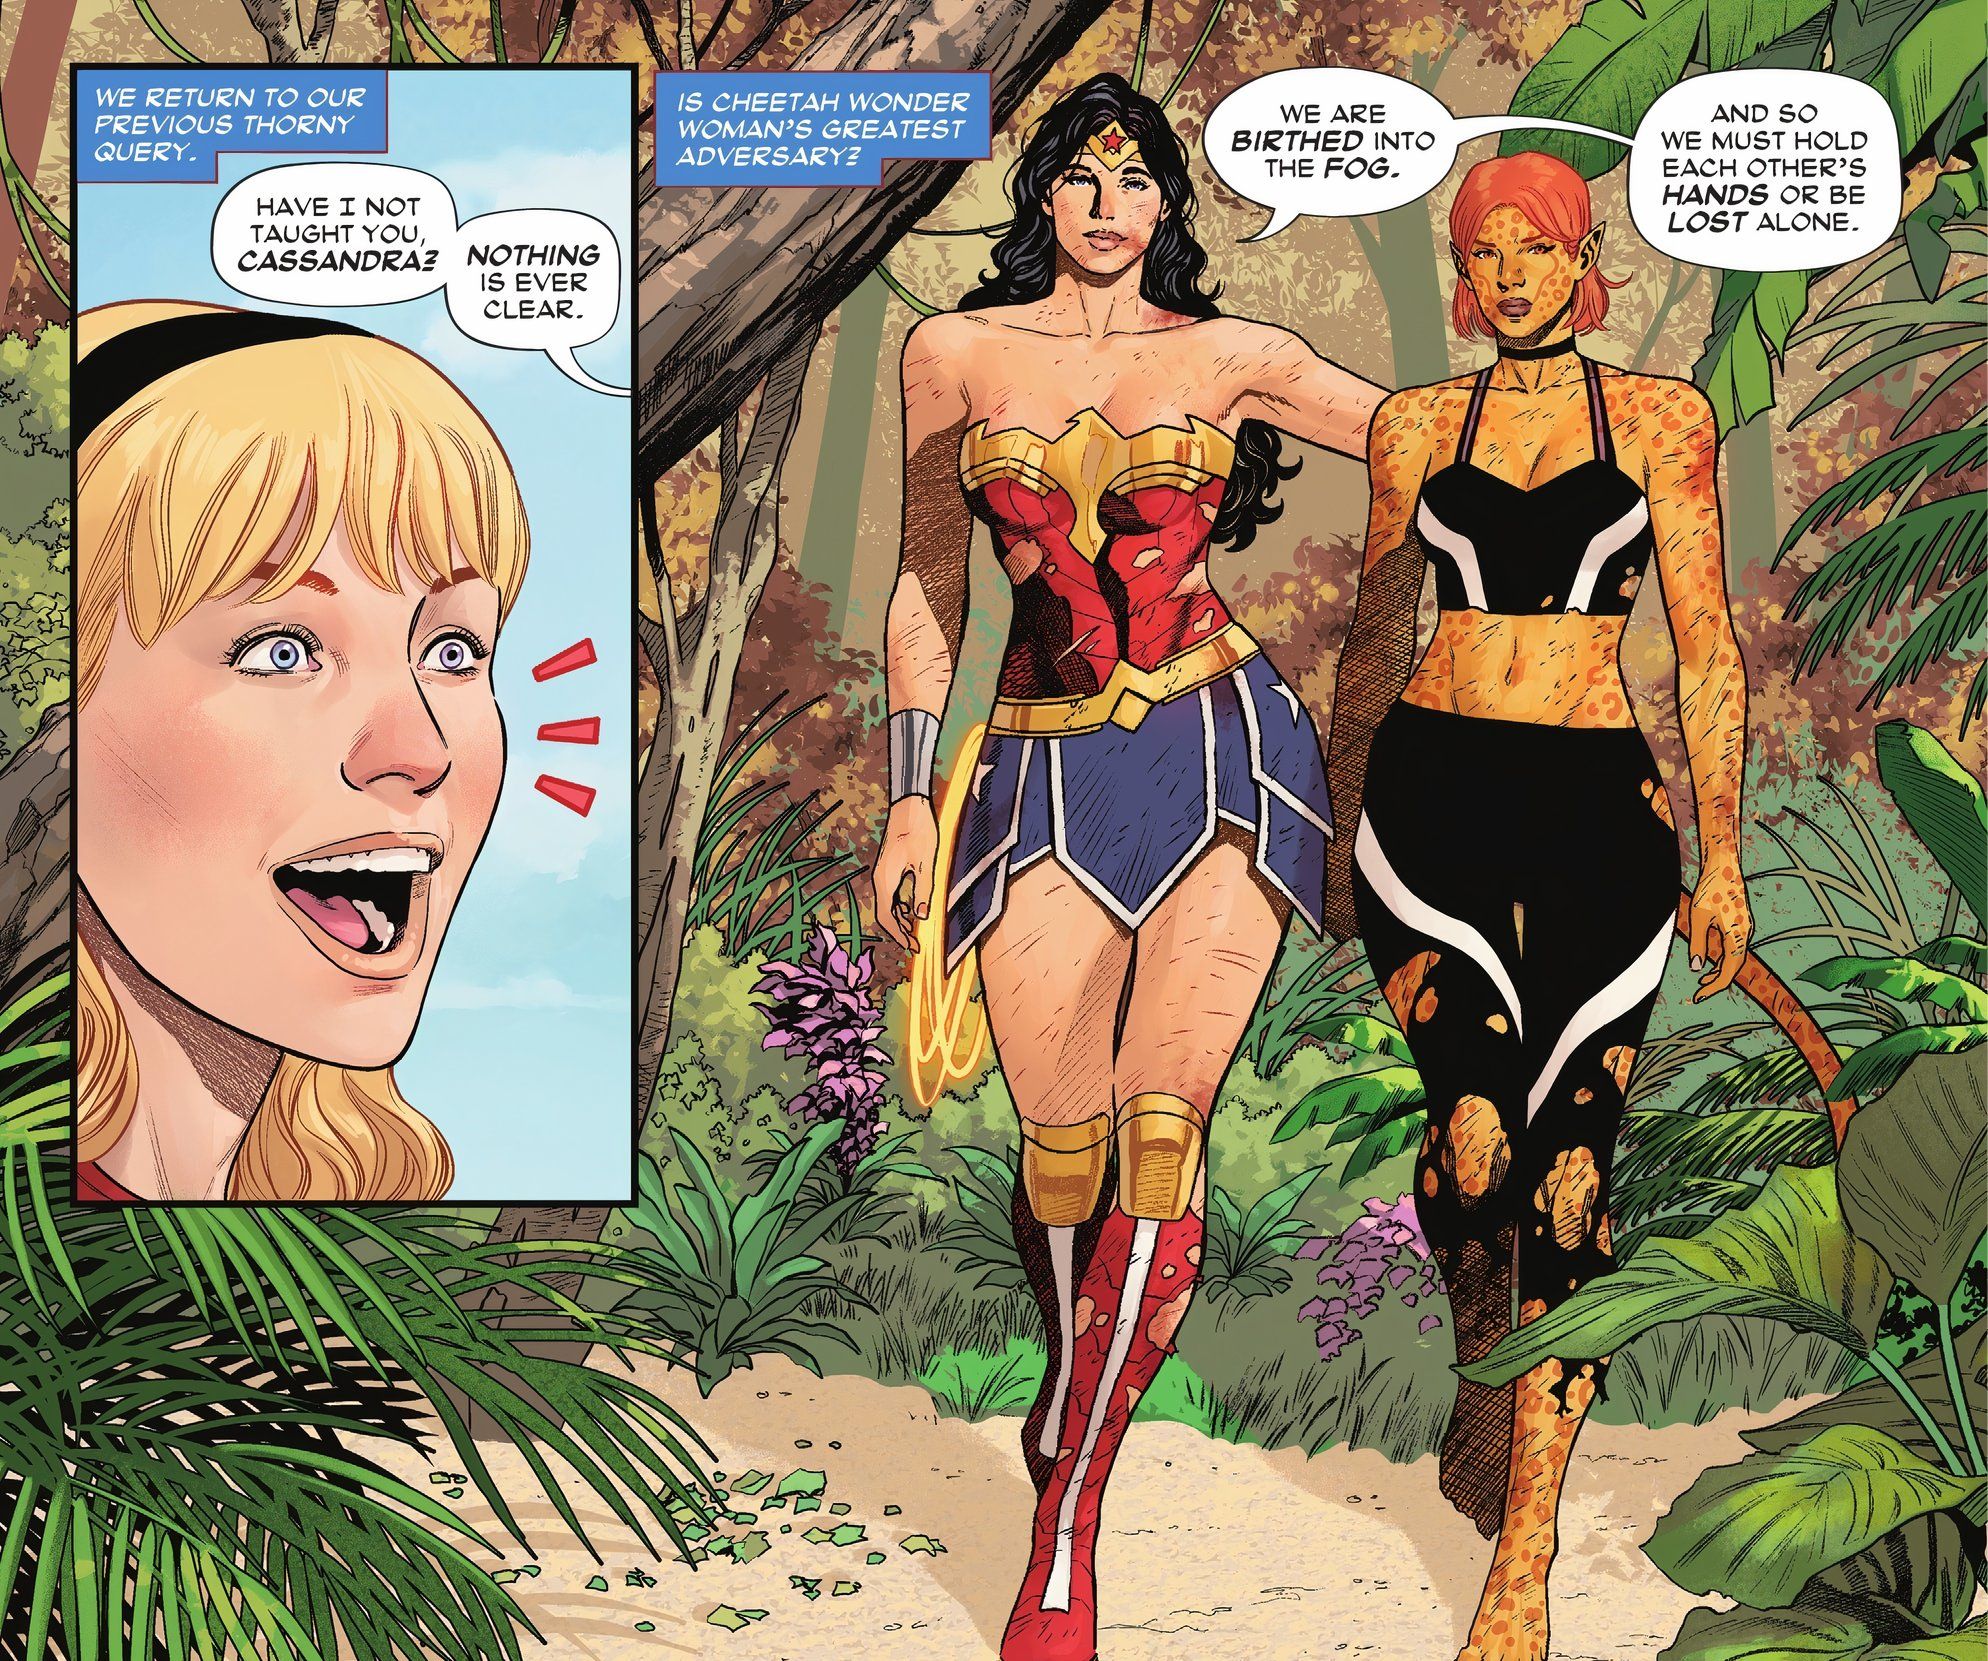 Wonder Woman #10 Diana and Cheetah allies and reuniting with Wonder Girls part 1